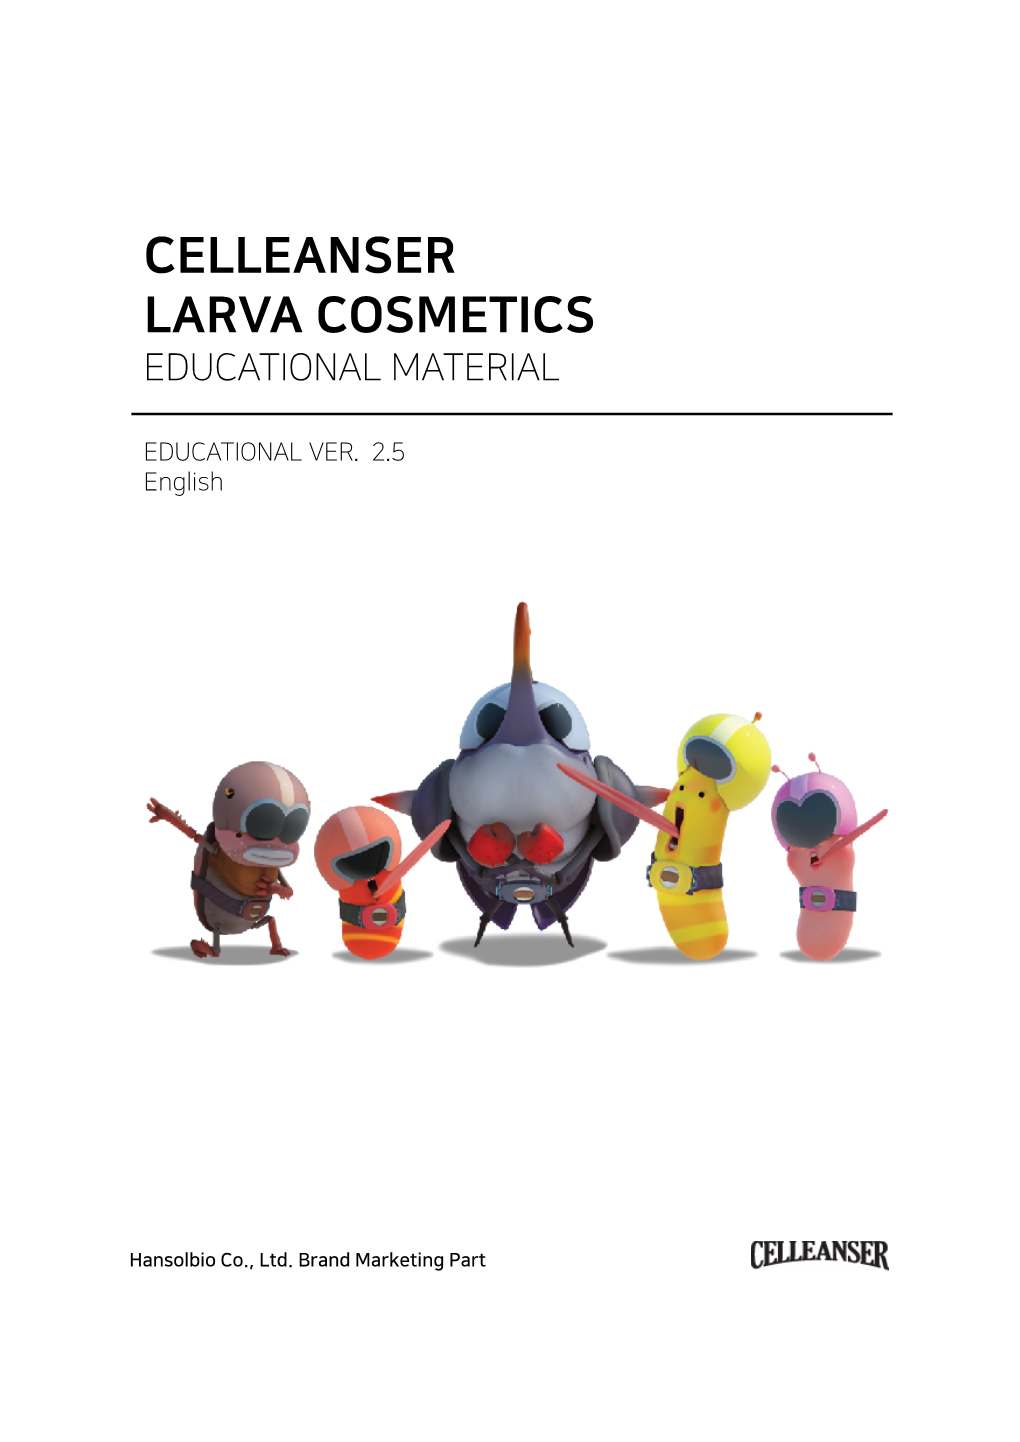 Celleanser Larva Cosmetics Educational Material